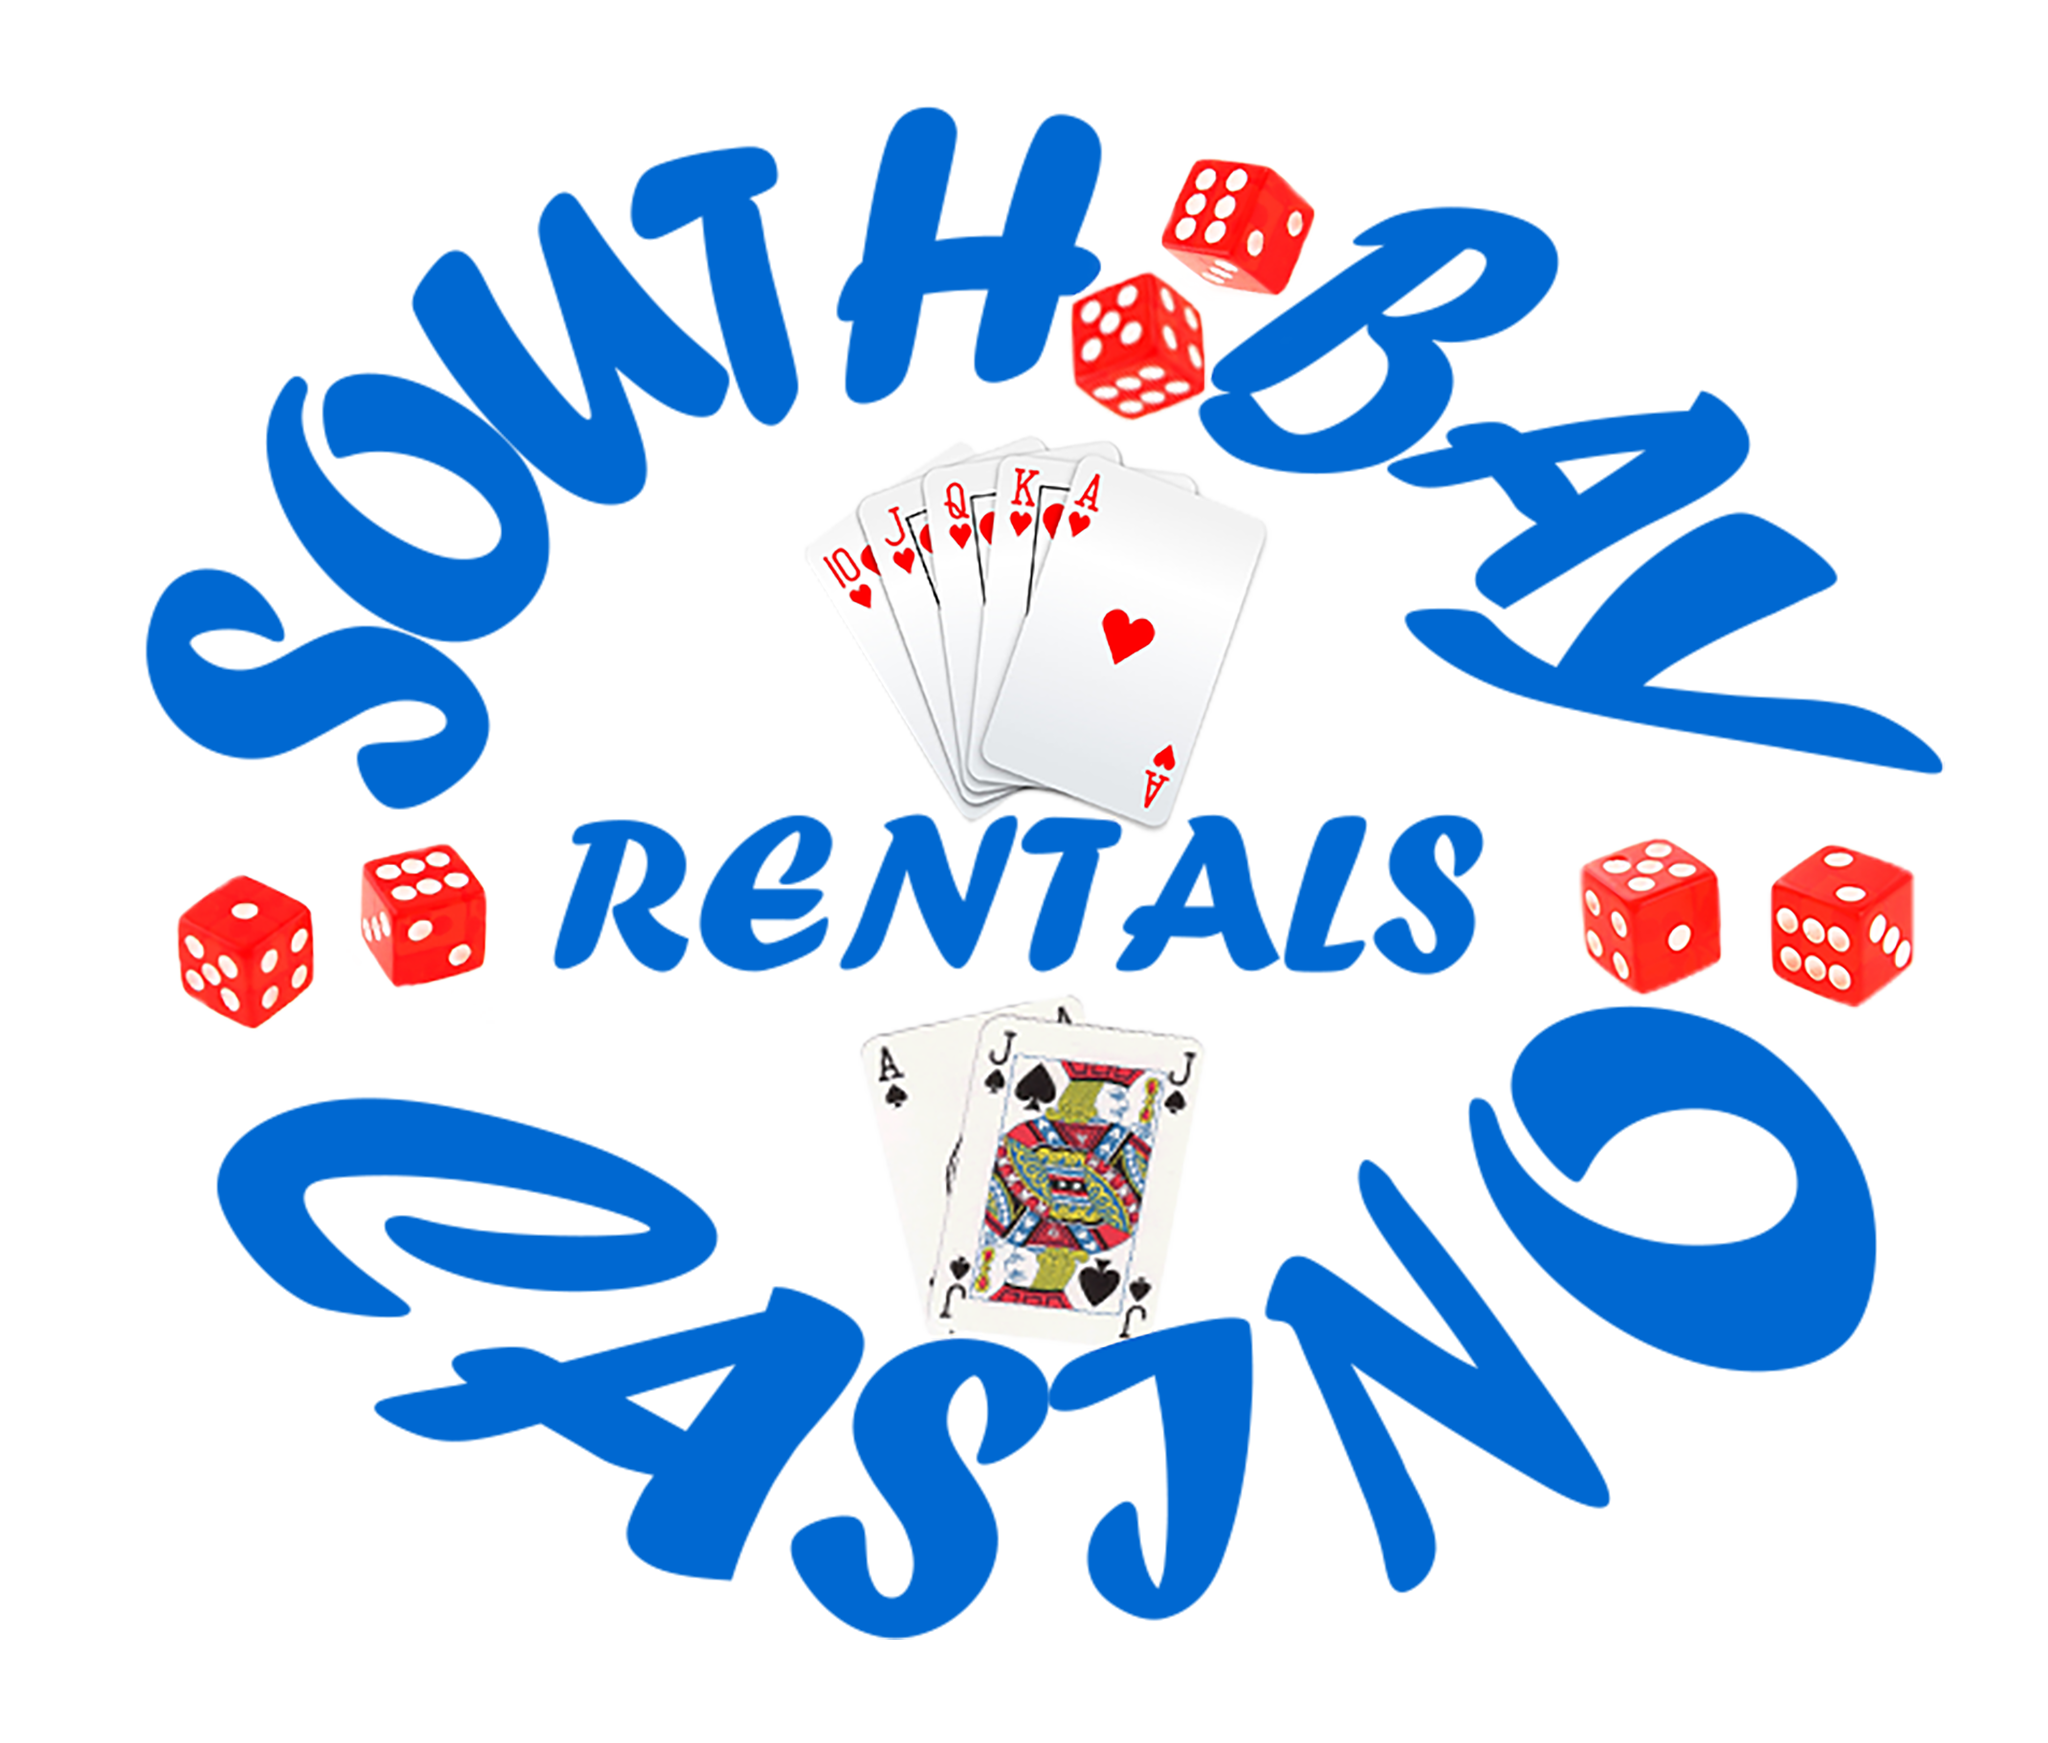 South Bay Casino Rentals